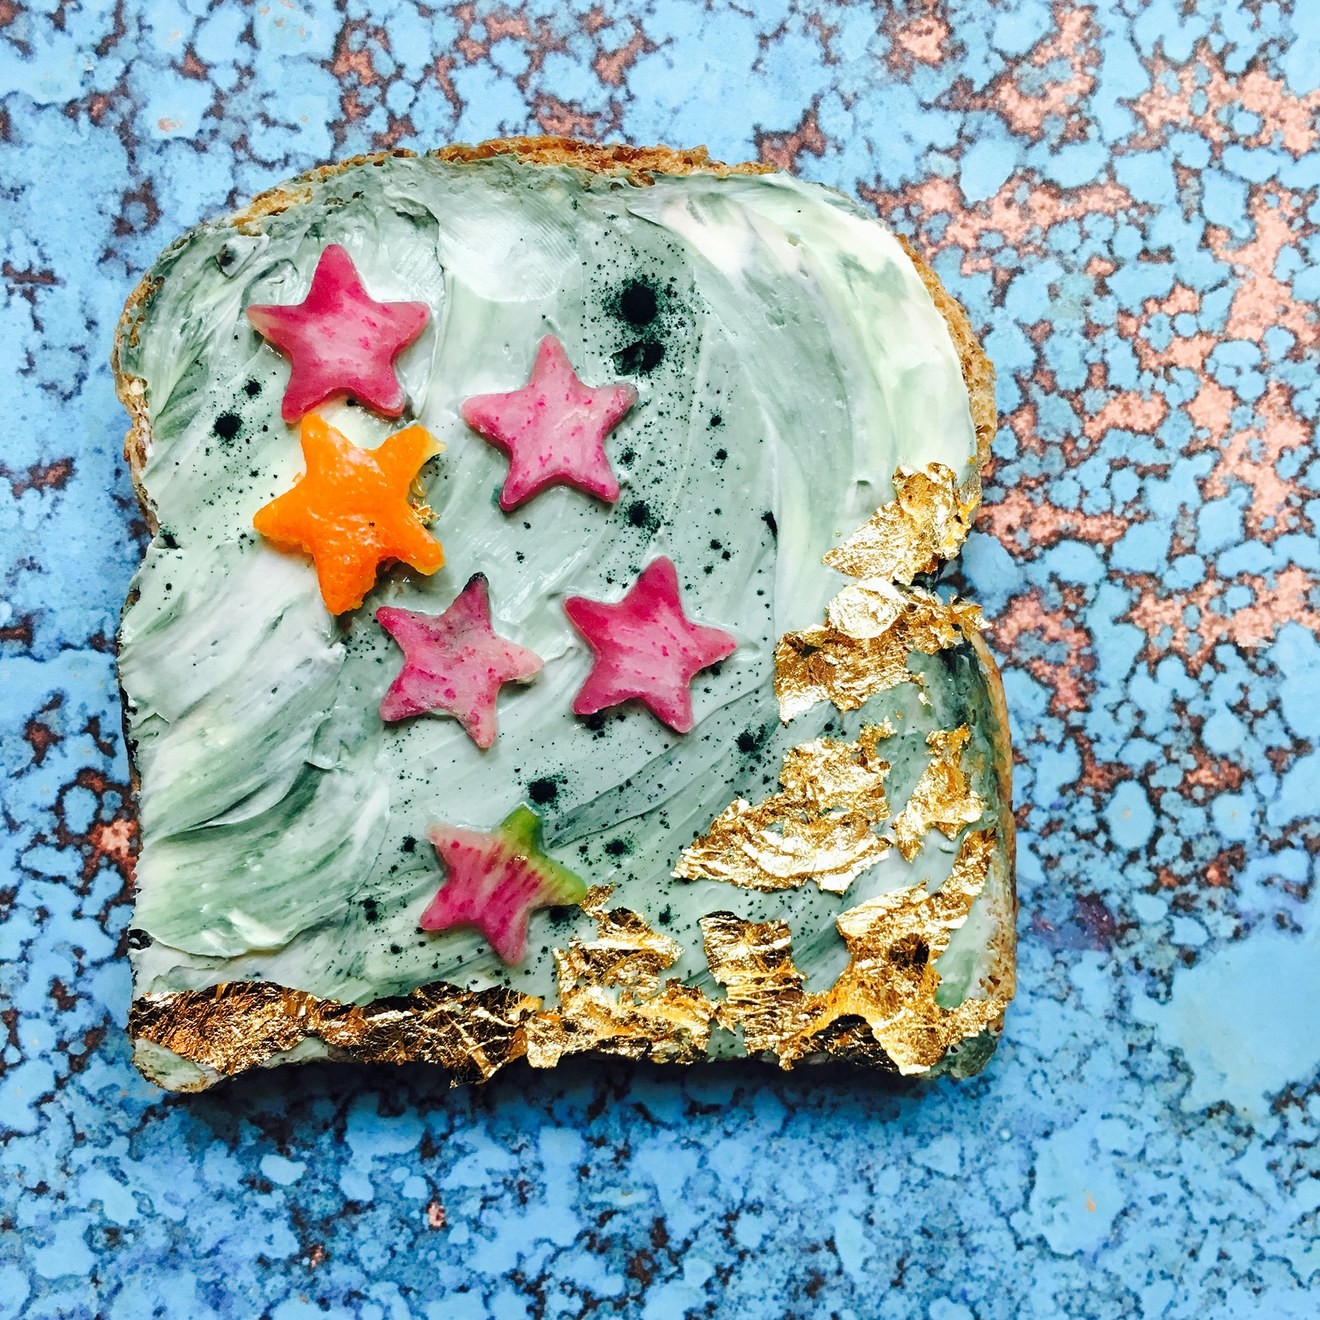 Food stylist Adeline Waugh’s ‘mermaid toast’ is a colourful example of unicorn food. Photo: Adeline Waugh